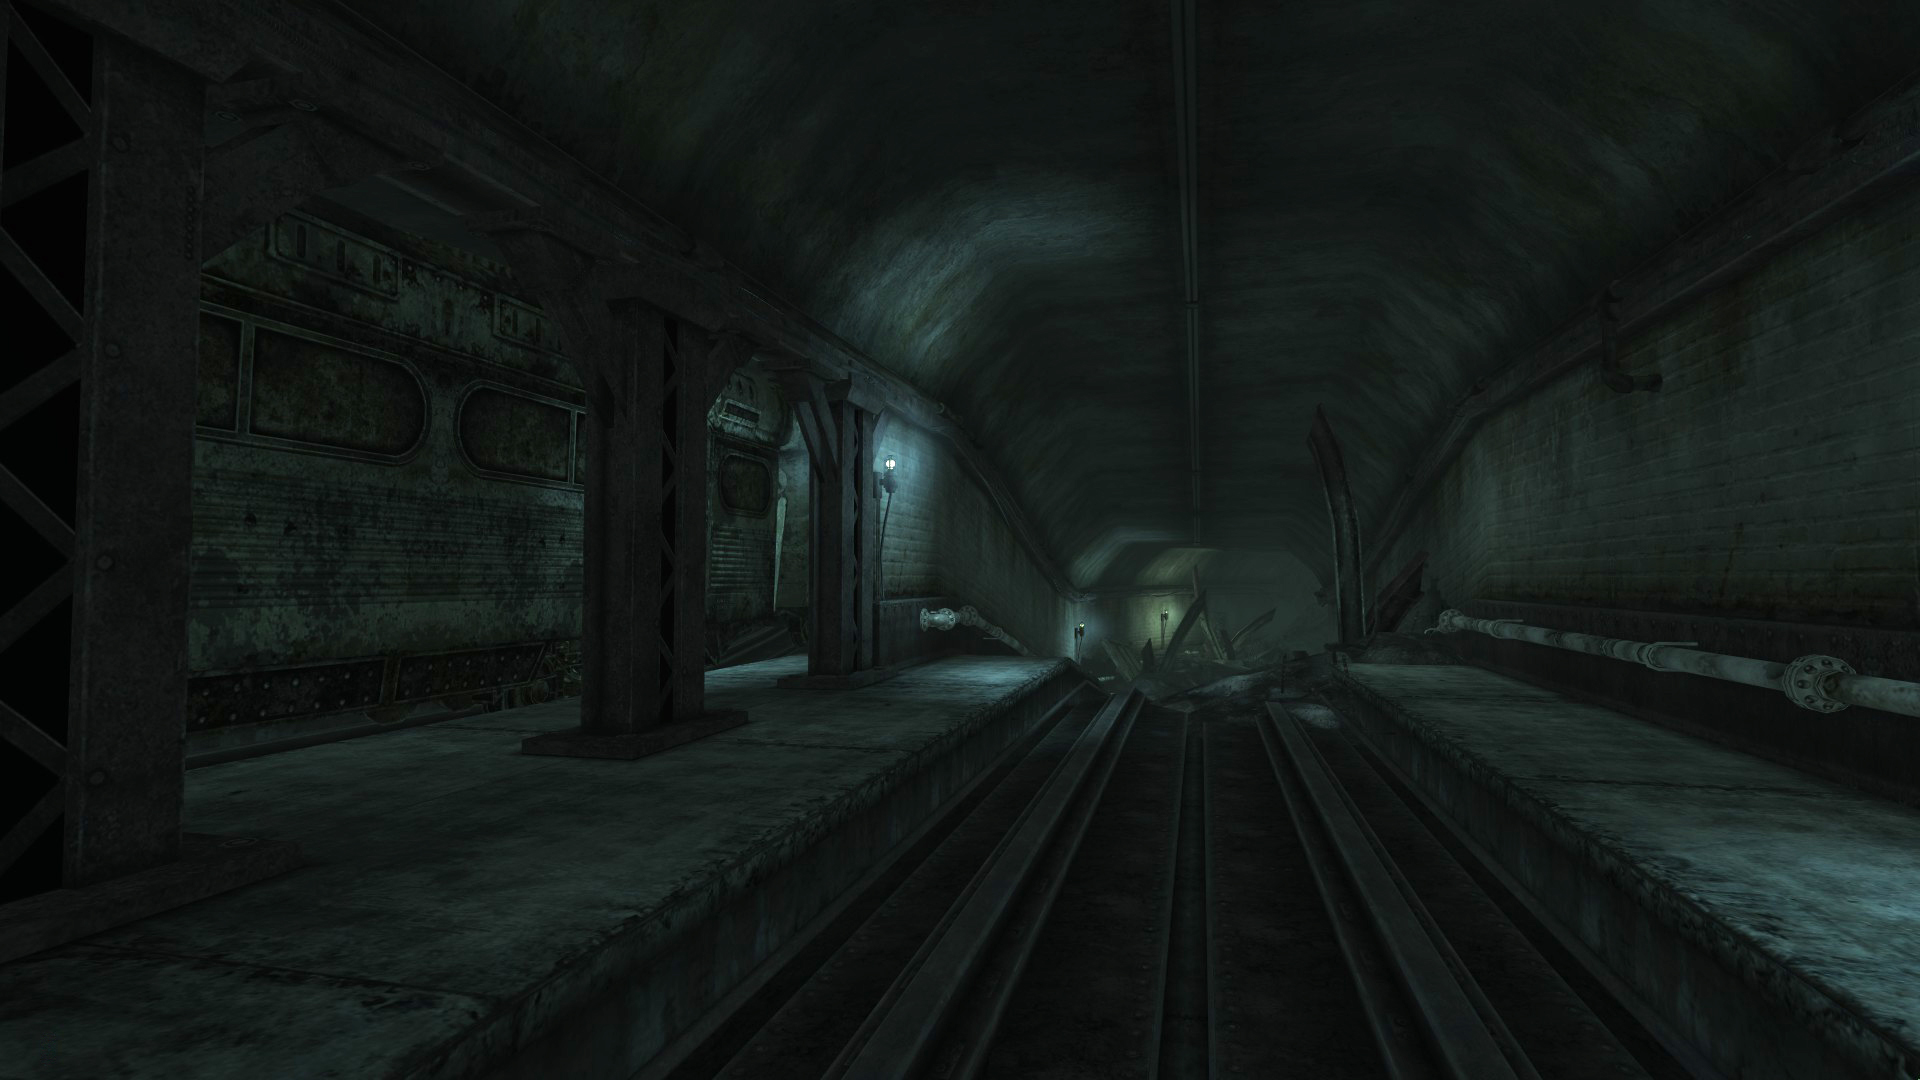 DCTA Metro map, Fallout Wiki